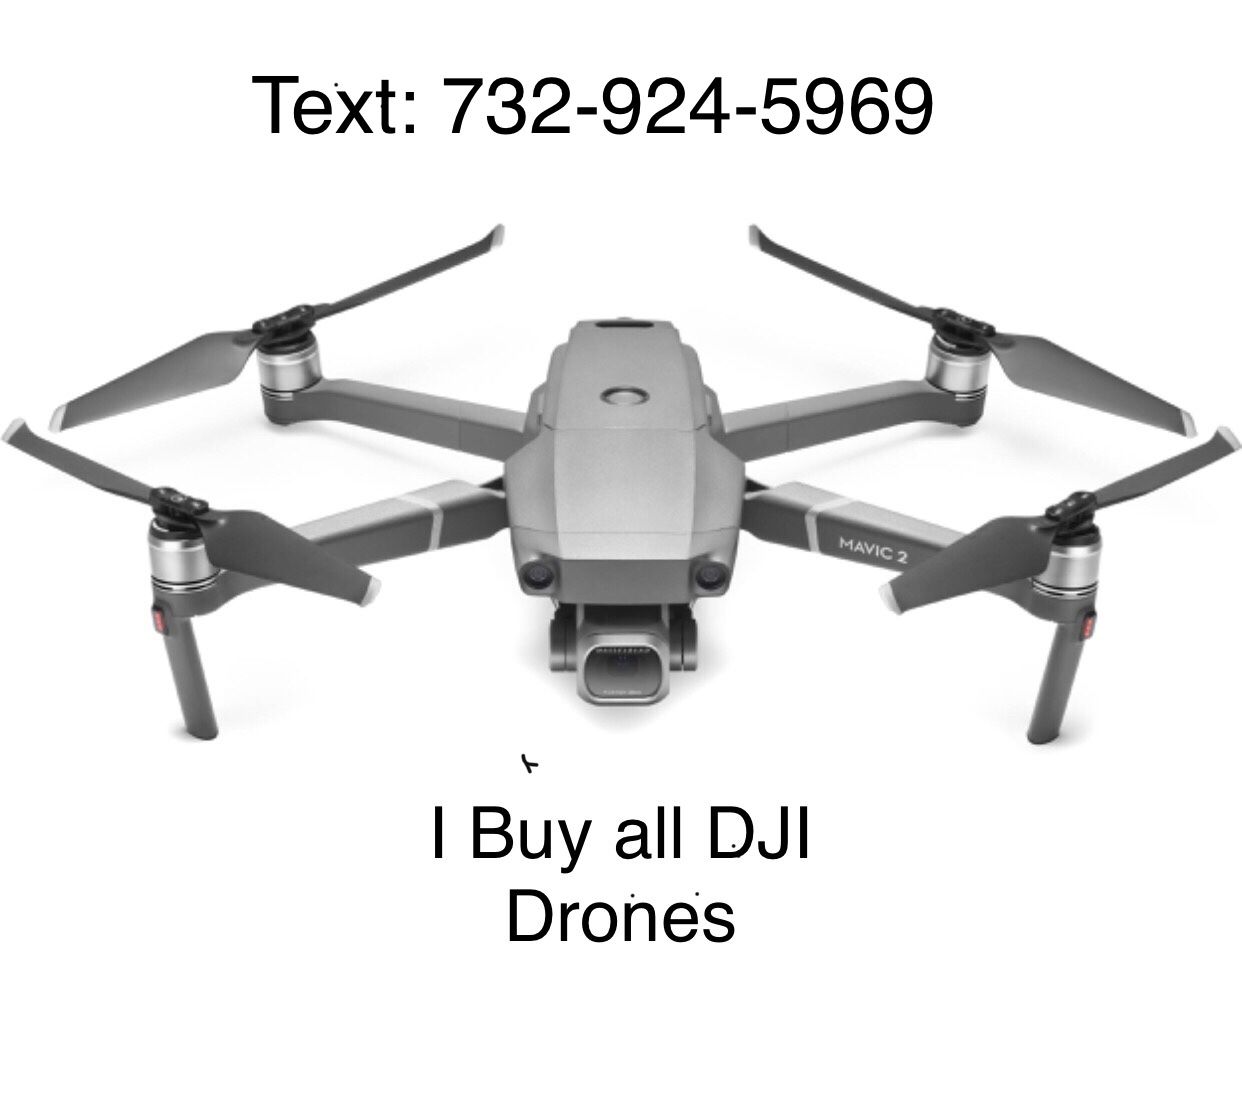 Dji Drones Buy, Sell or Trade